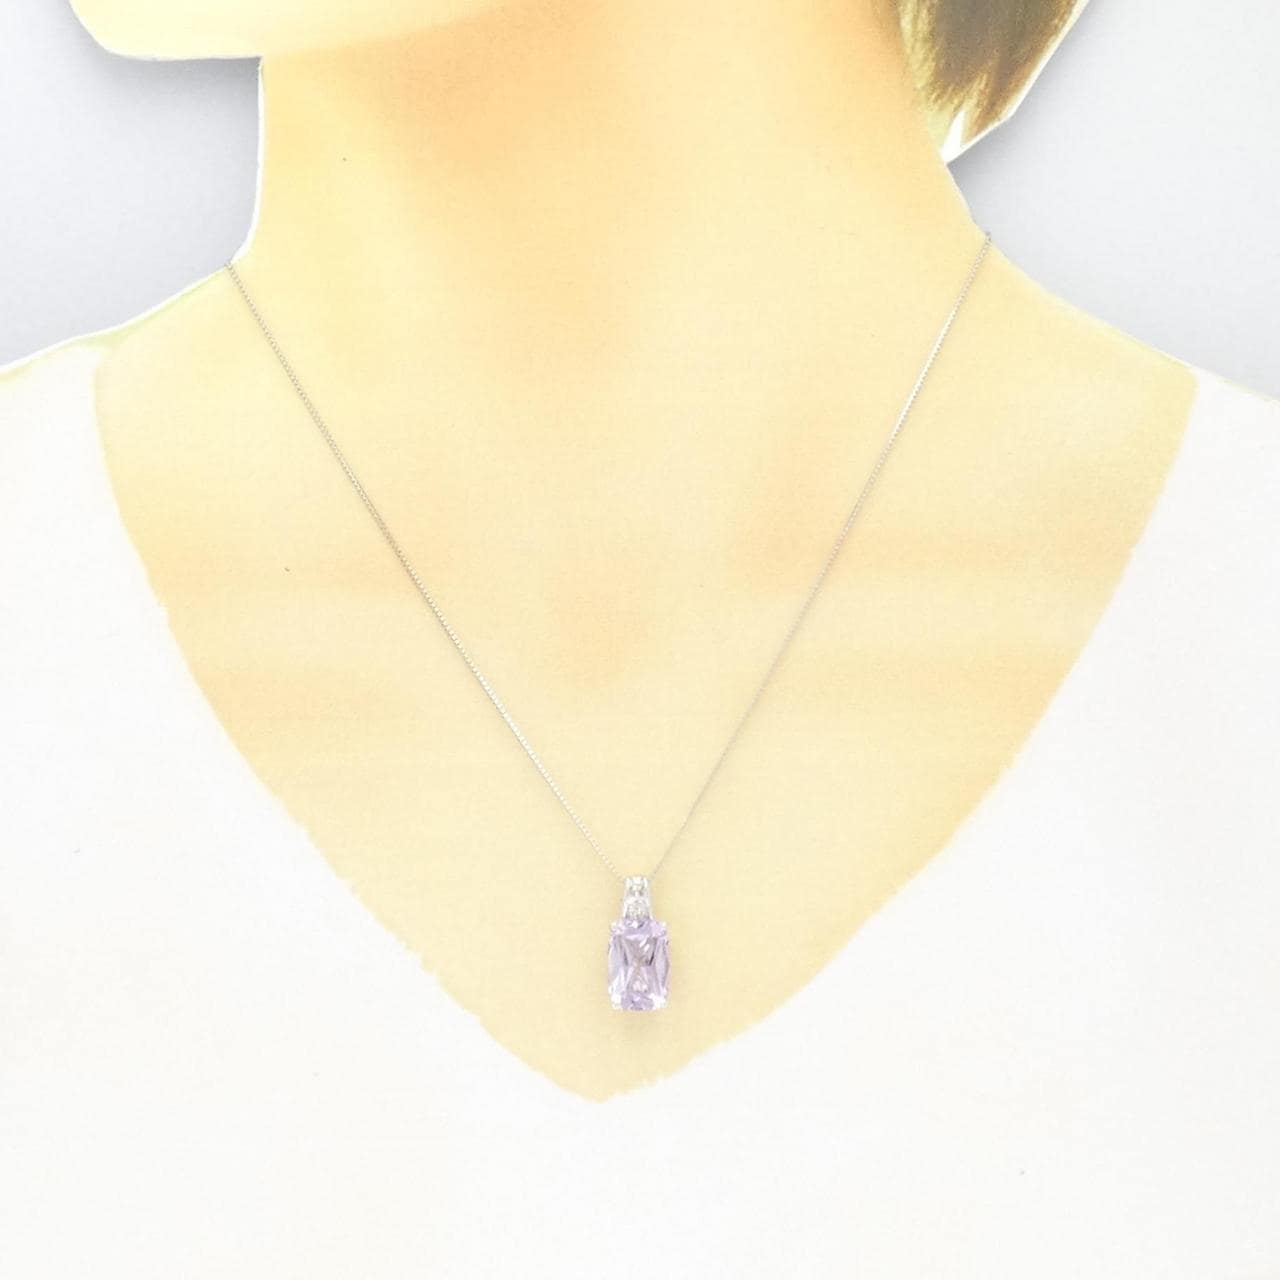 K18WG amethyst necklace